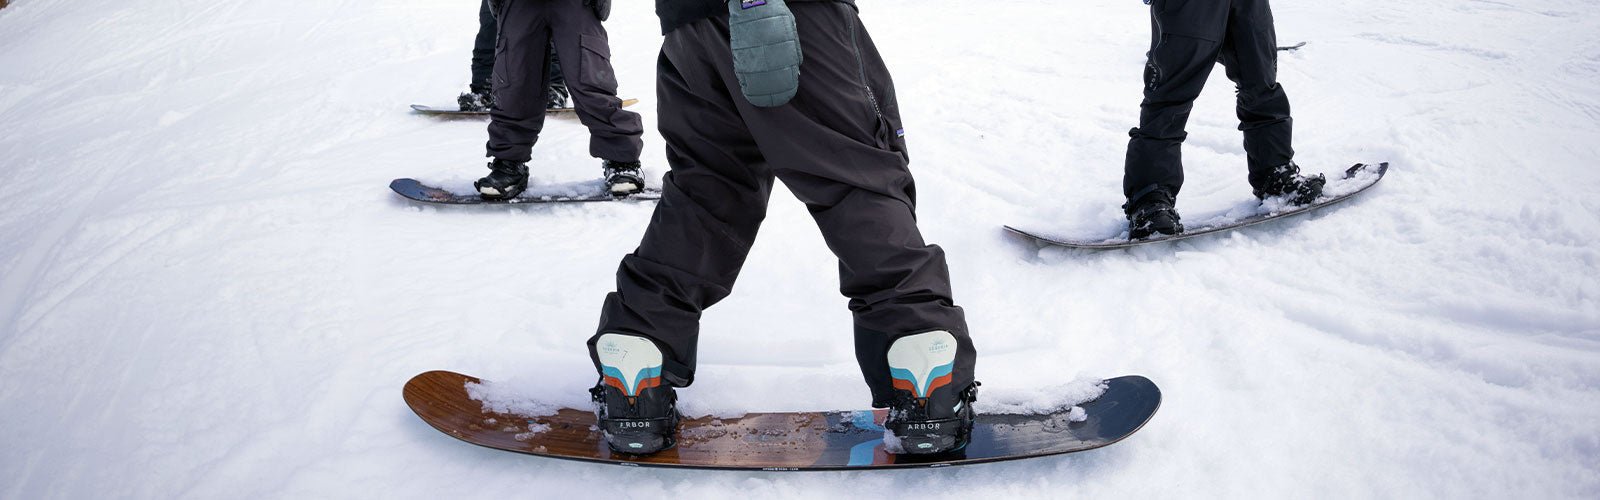 How to Buy Snowboard Bindings - Next Adventure